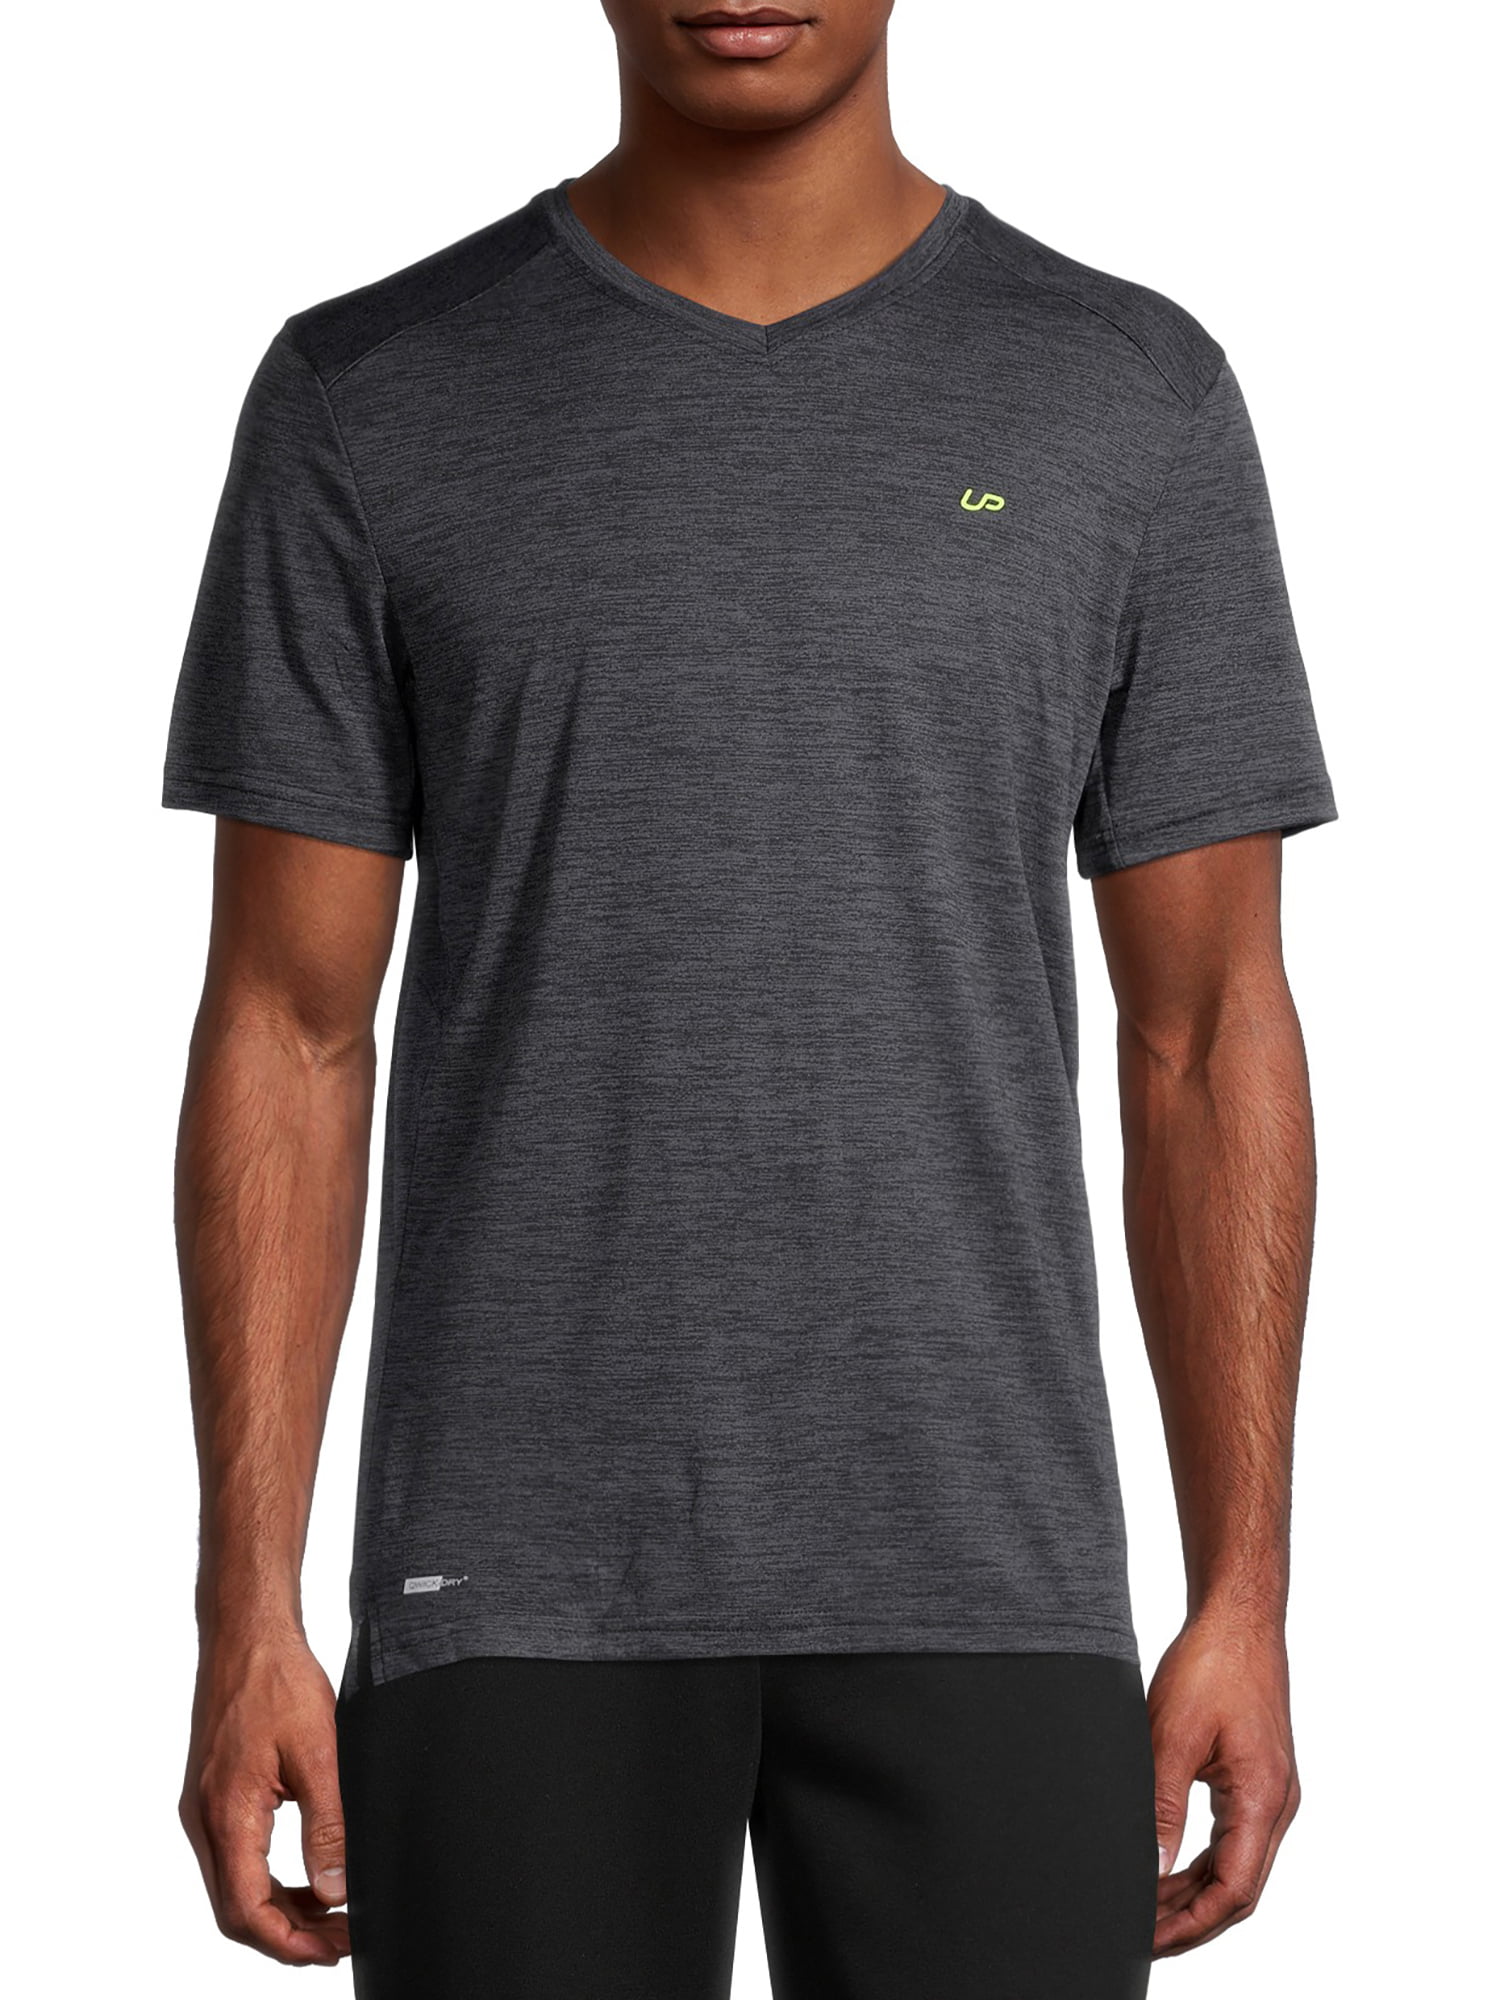 Unipro Men's Heather Wicking V-Neck T-Shirt, up to Size 2XL - Walmart.com